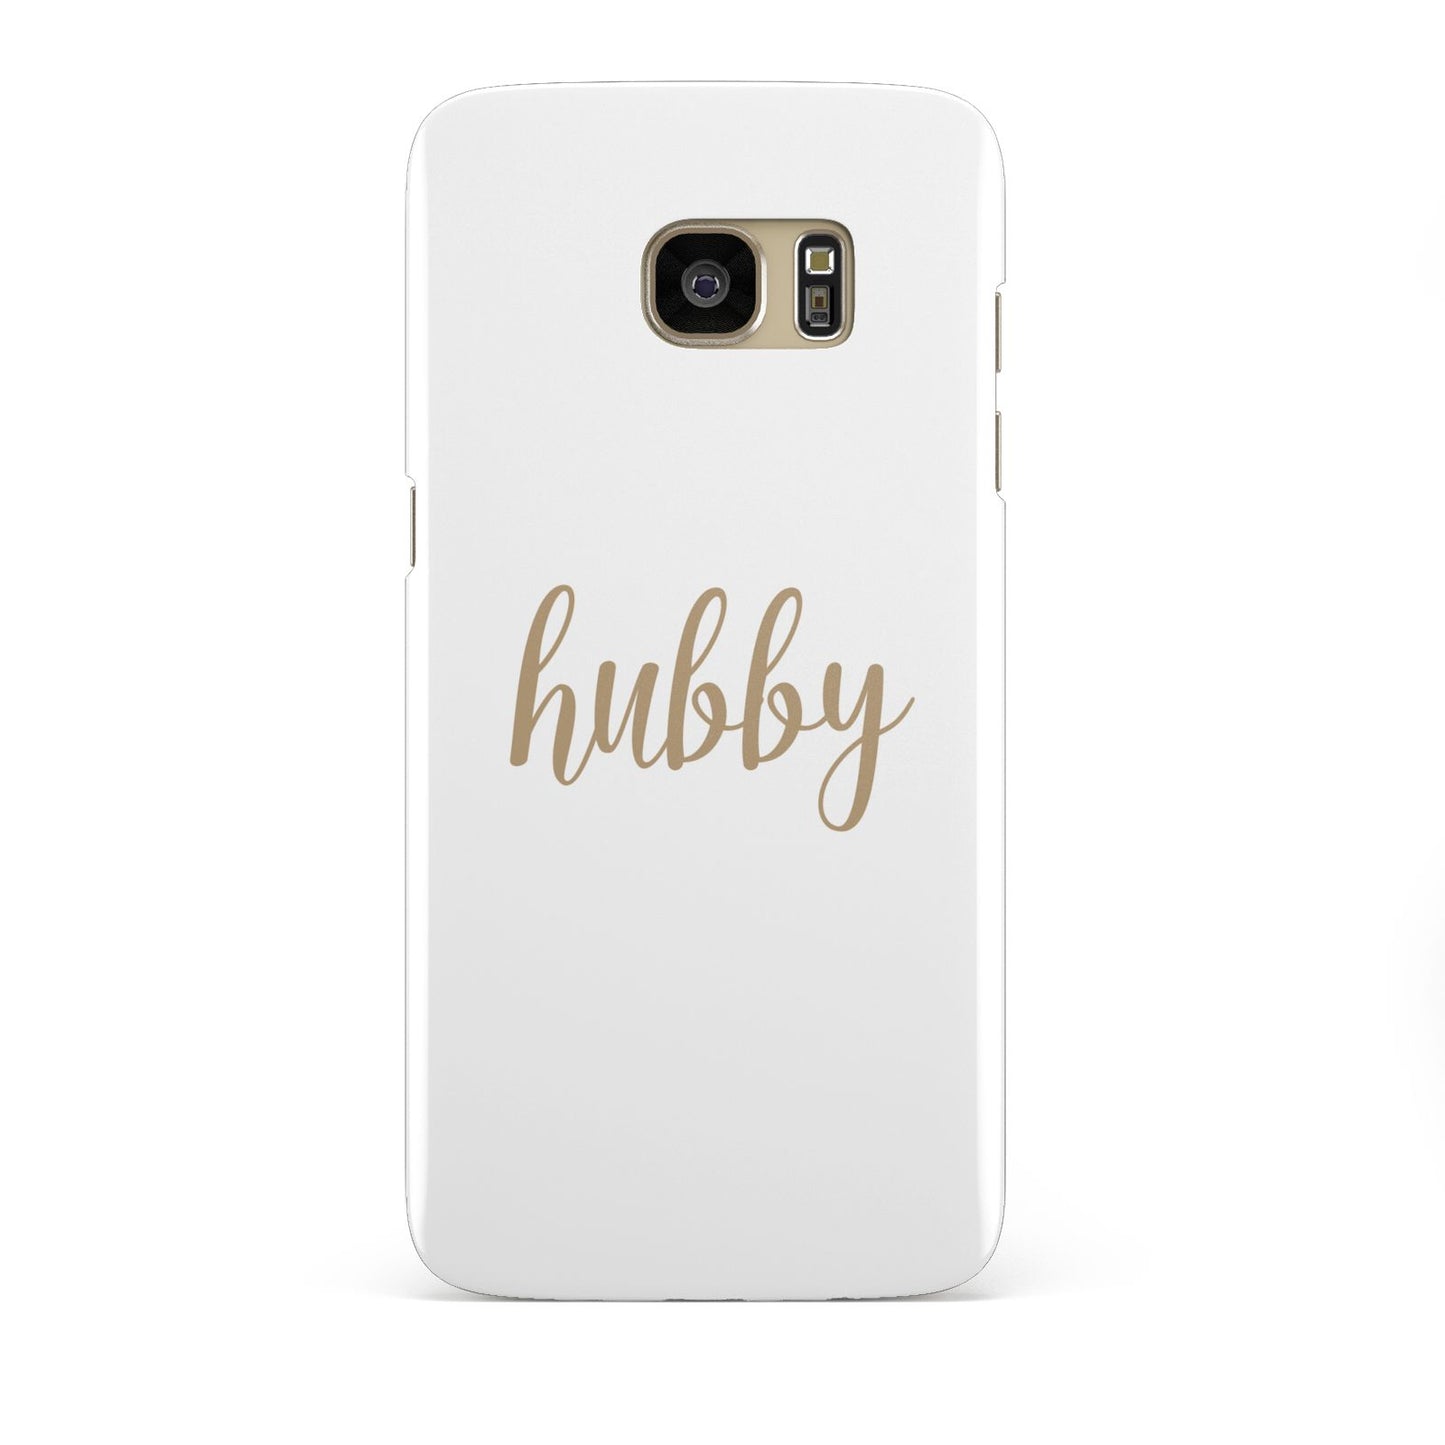 Hubby Samsung Galaxy S7 Edge Case